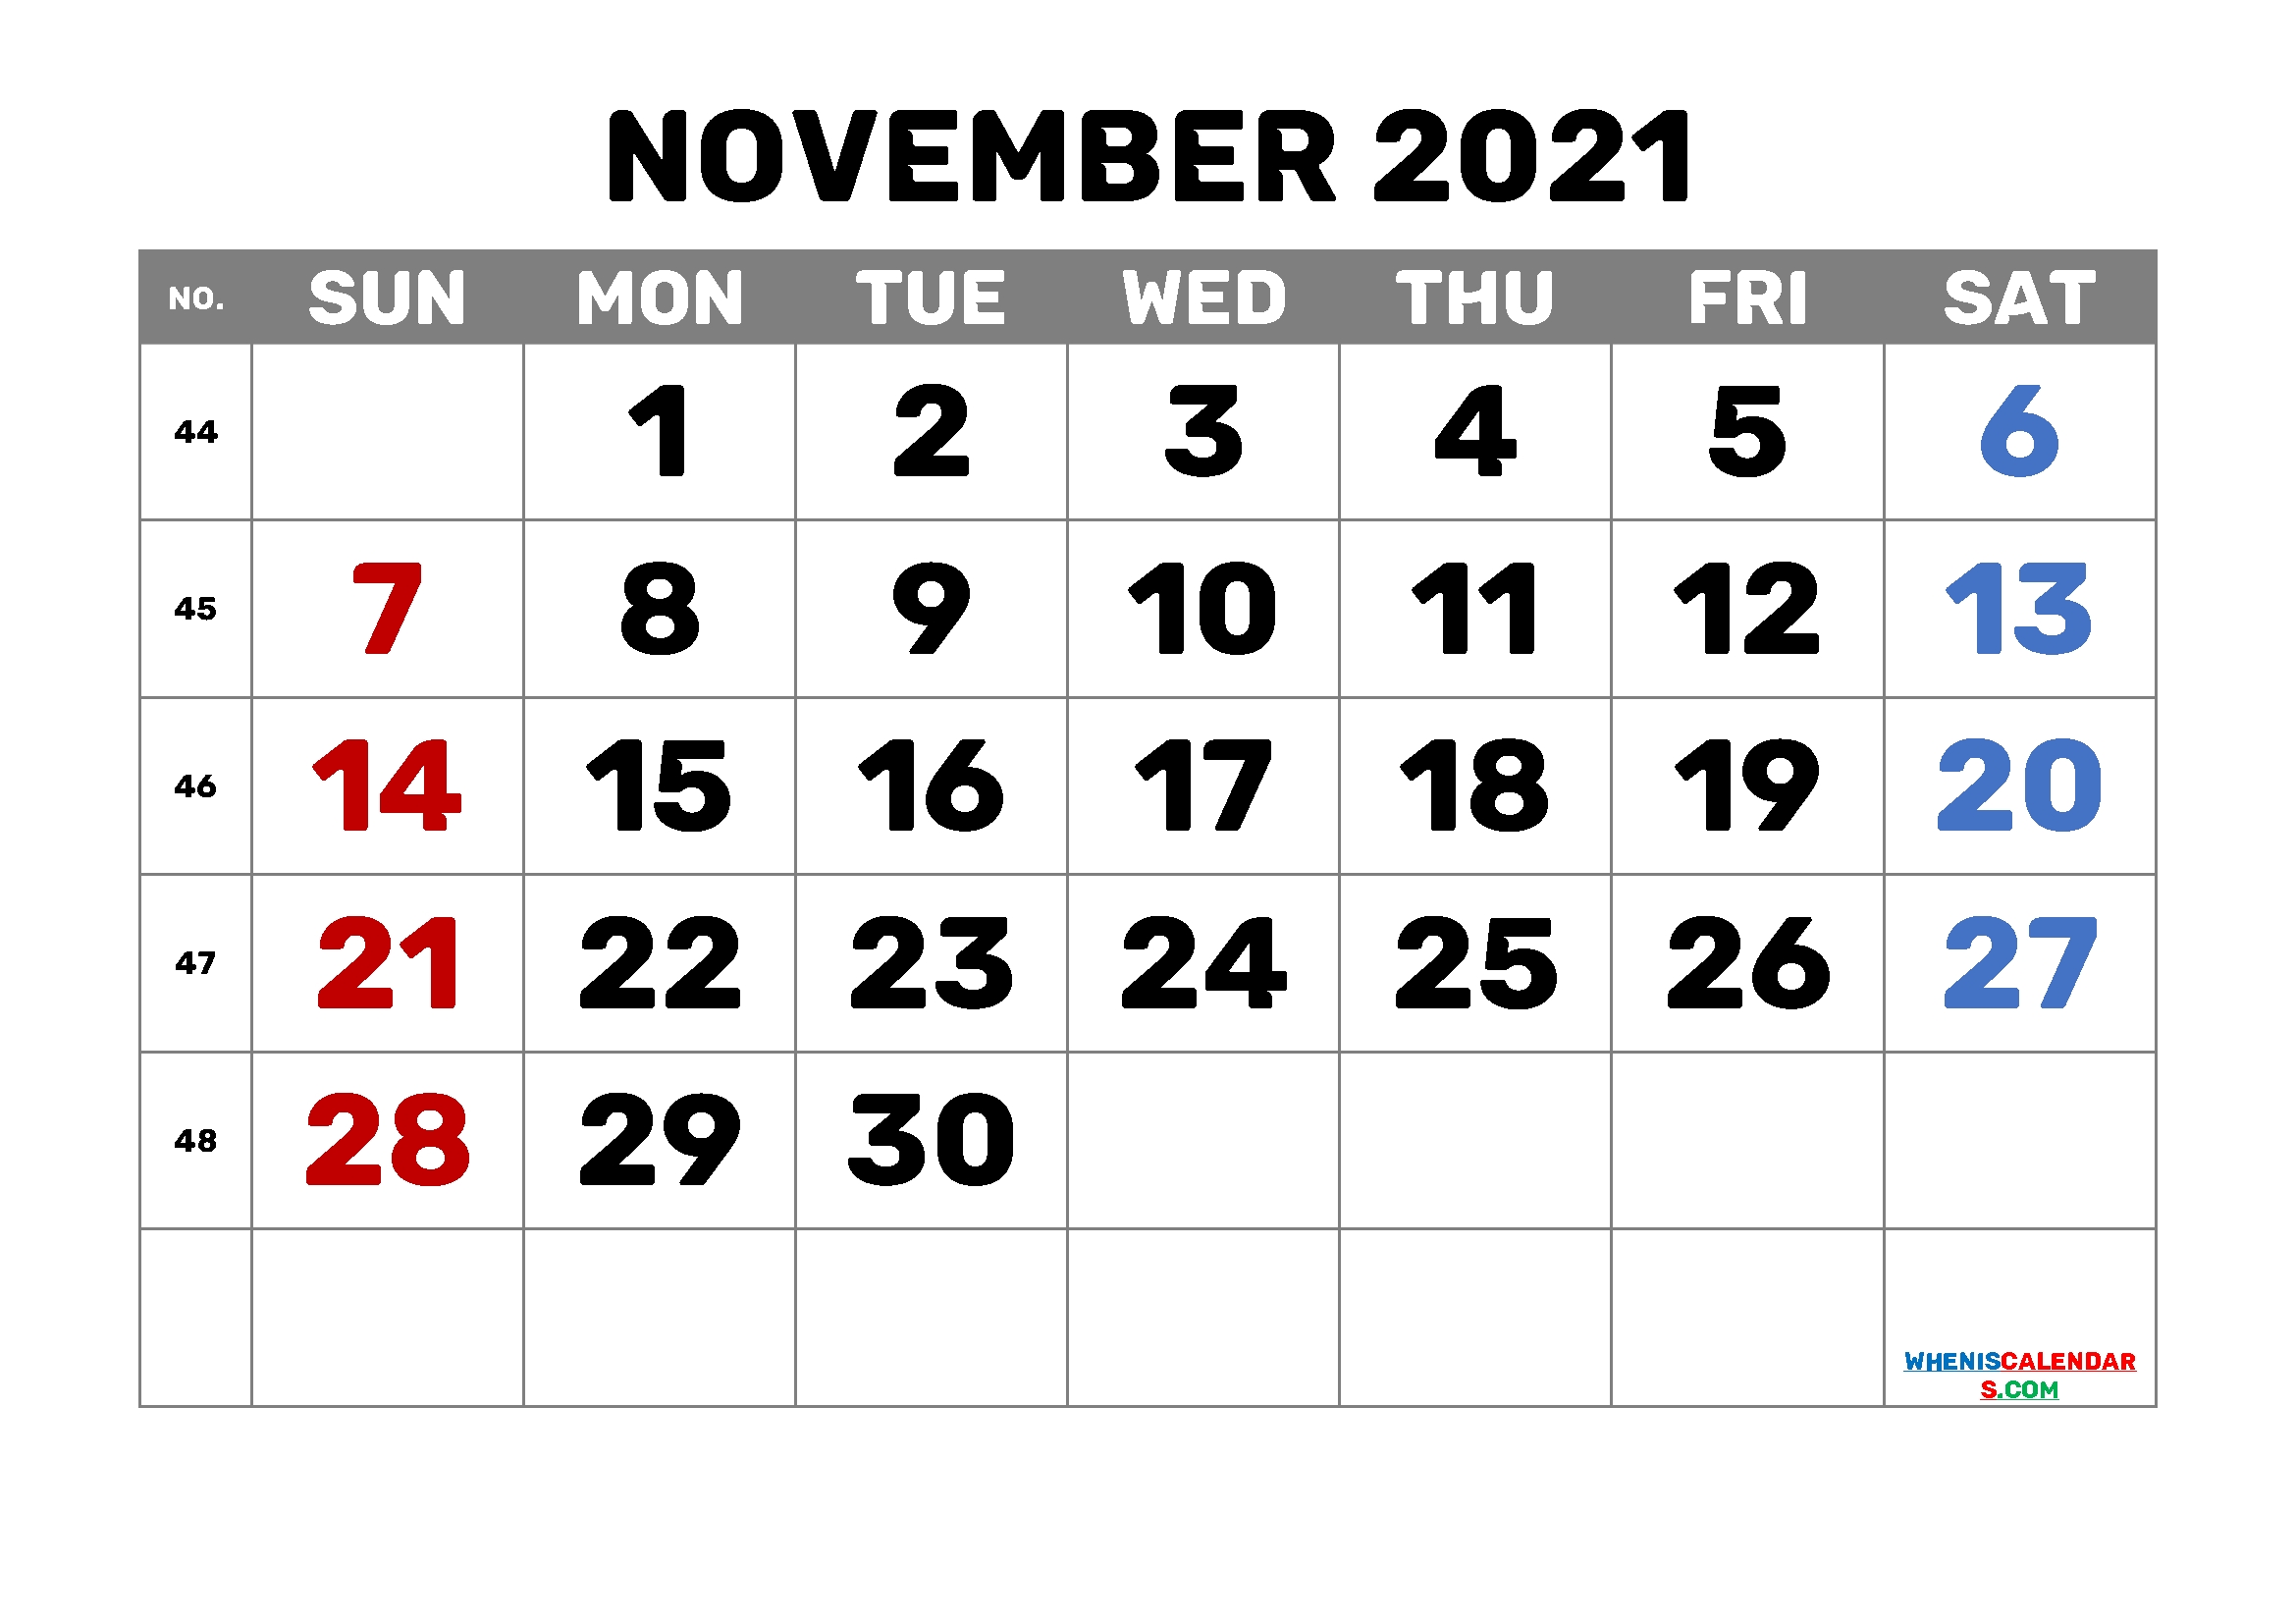 Free Printable November 2021 Calendar November 2021 Calendar Free Printable